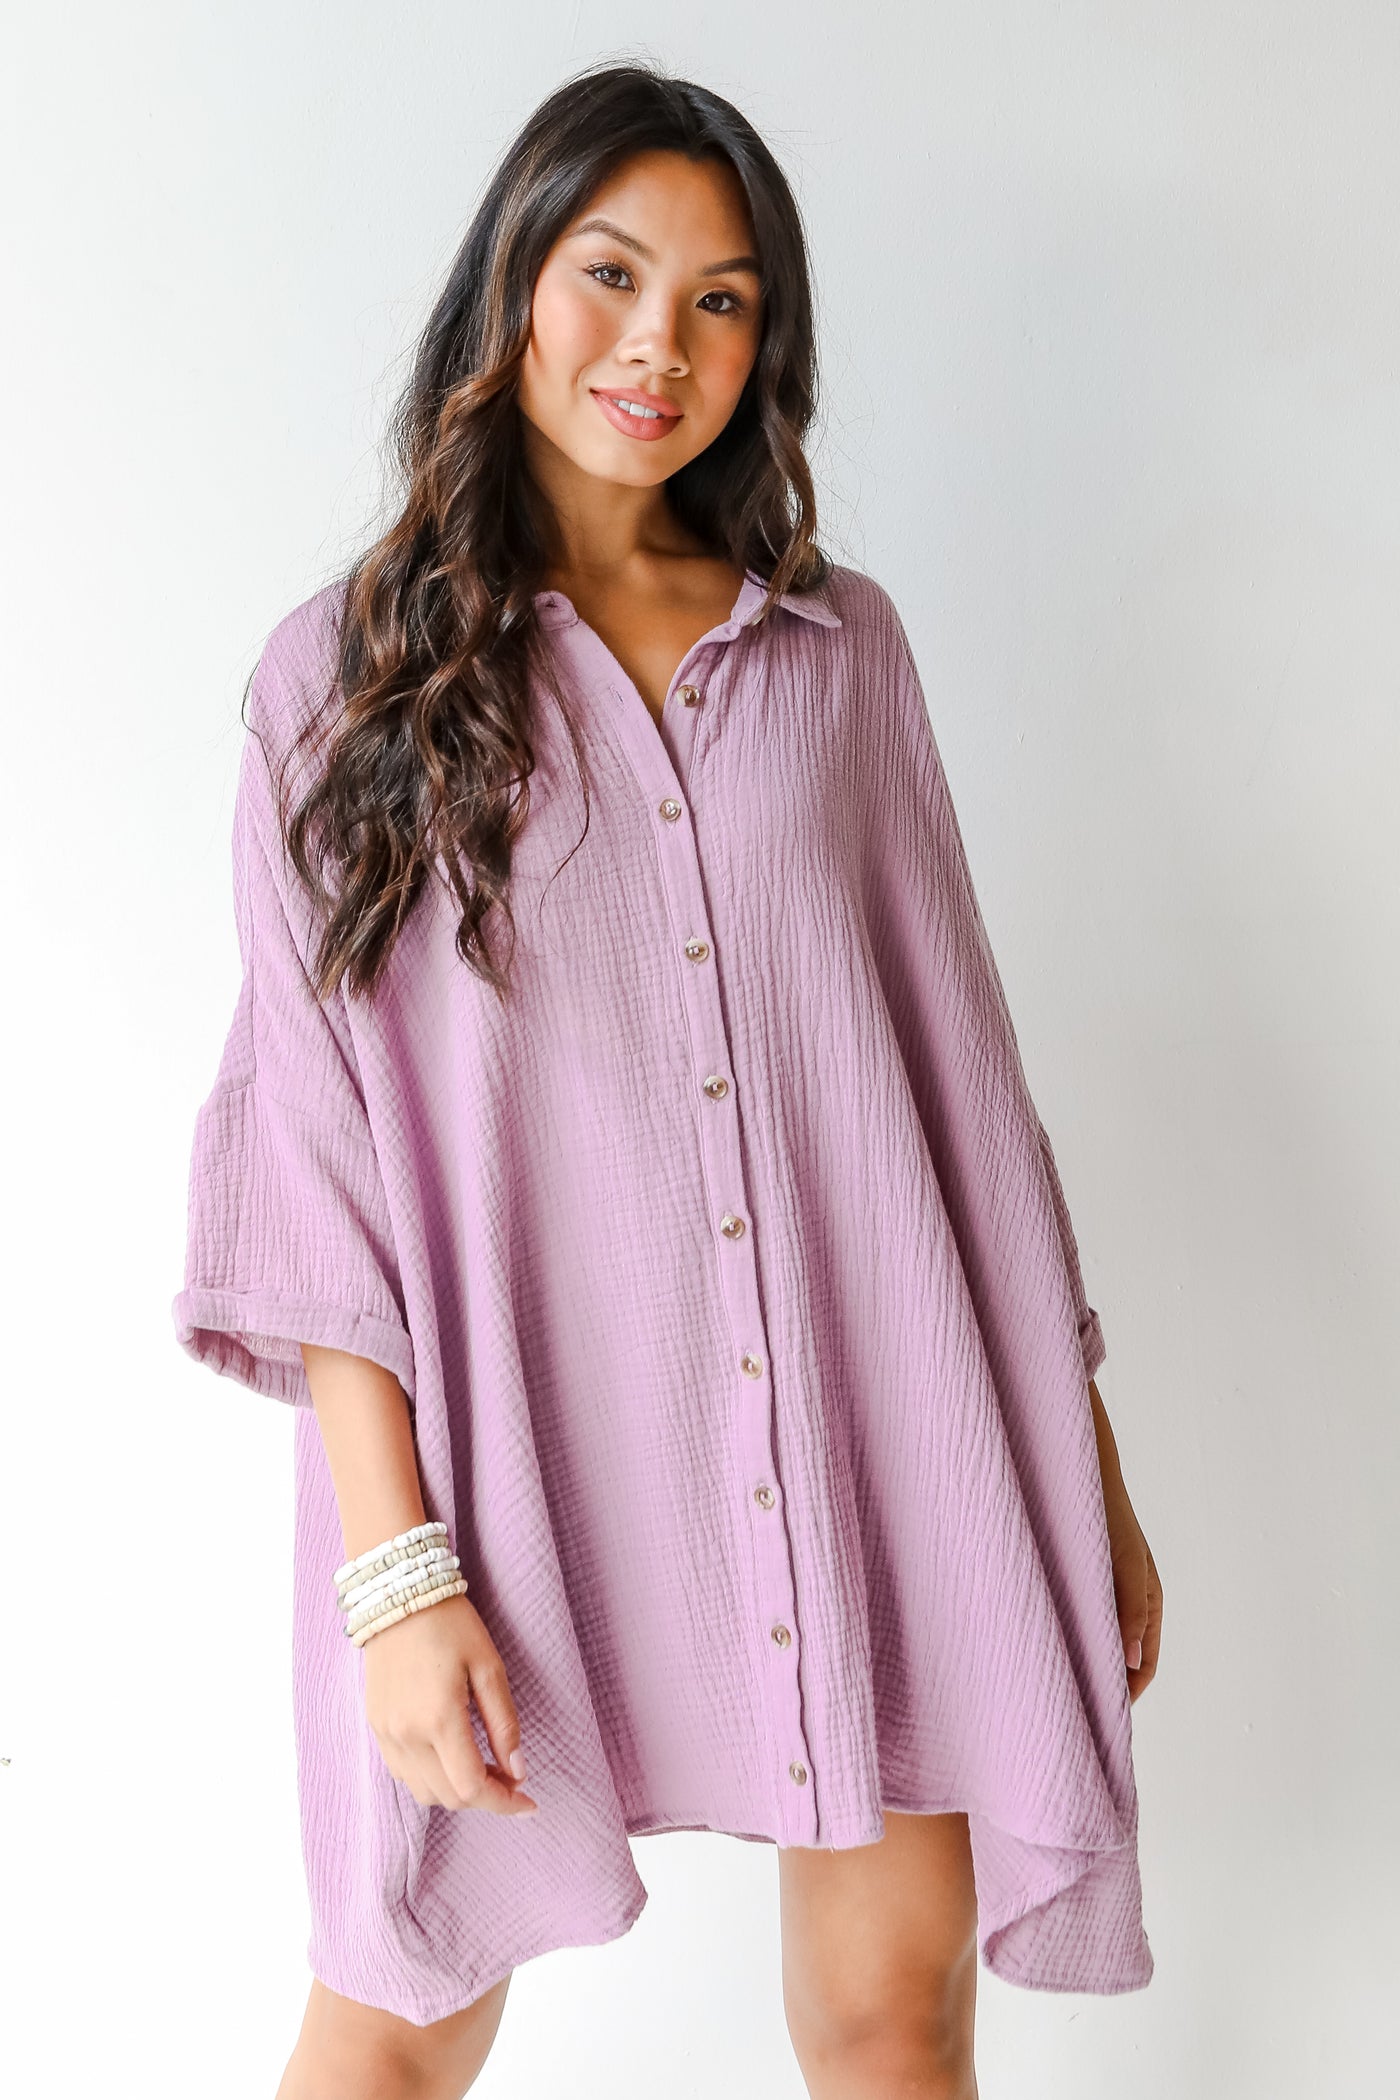 Linen Tunic in lavender